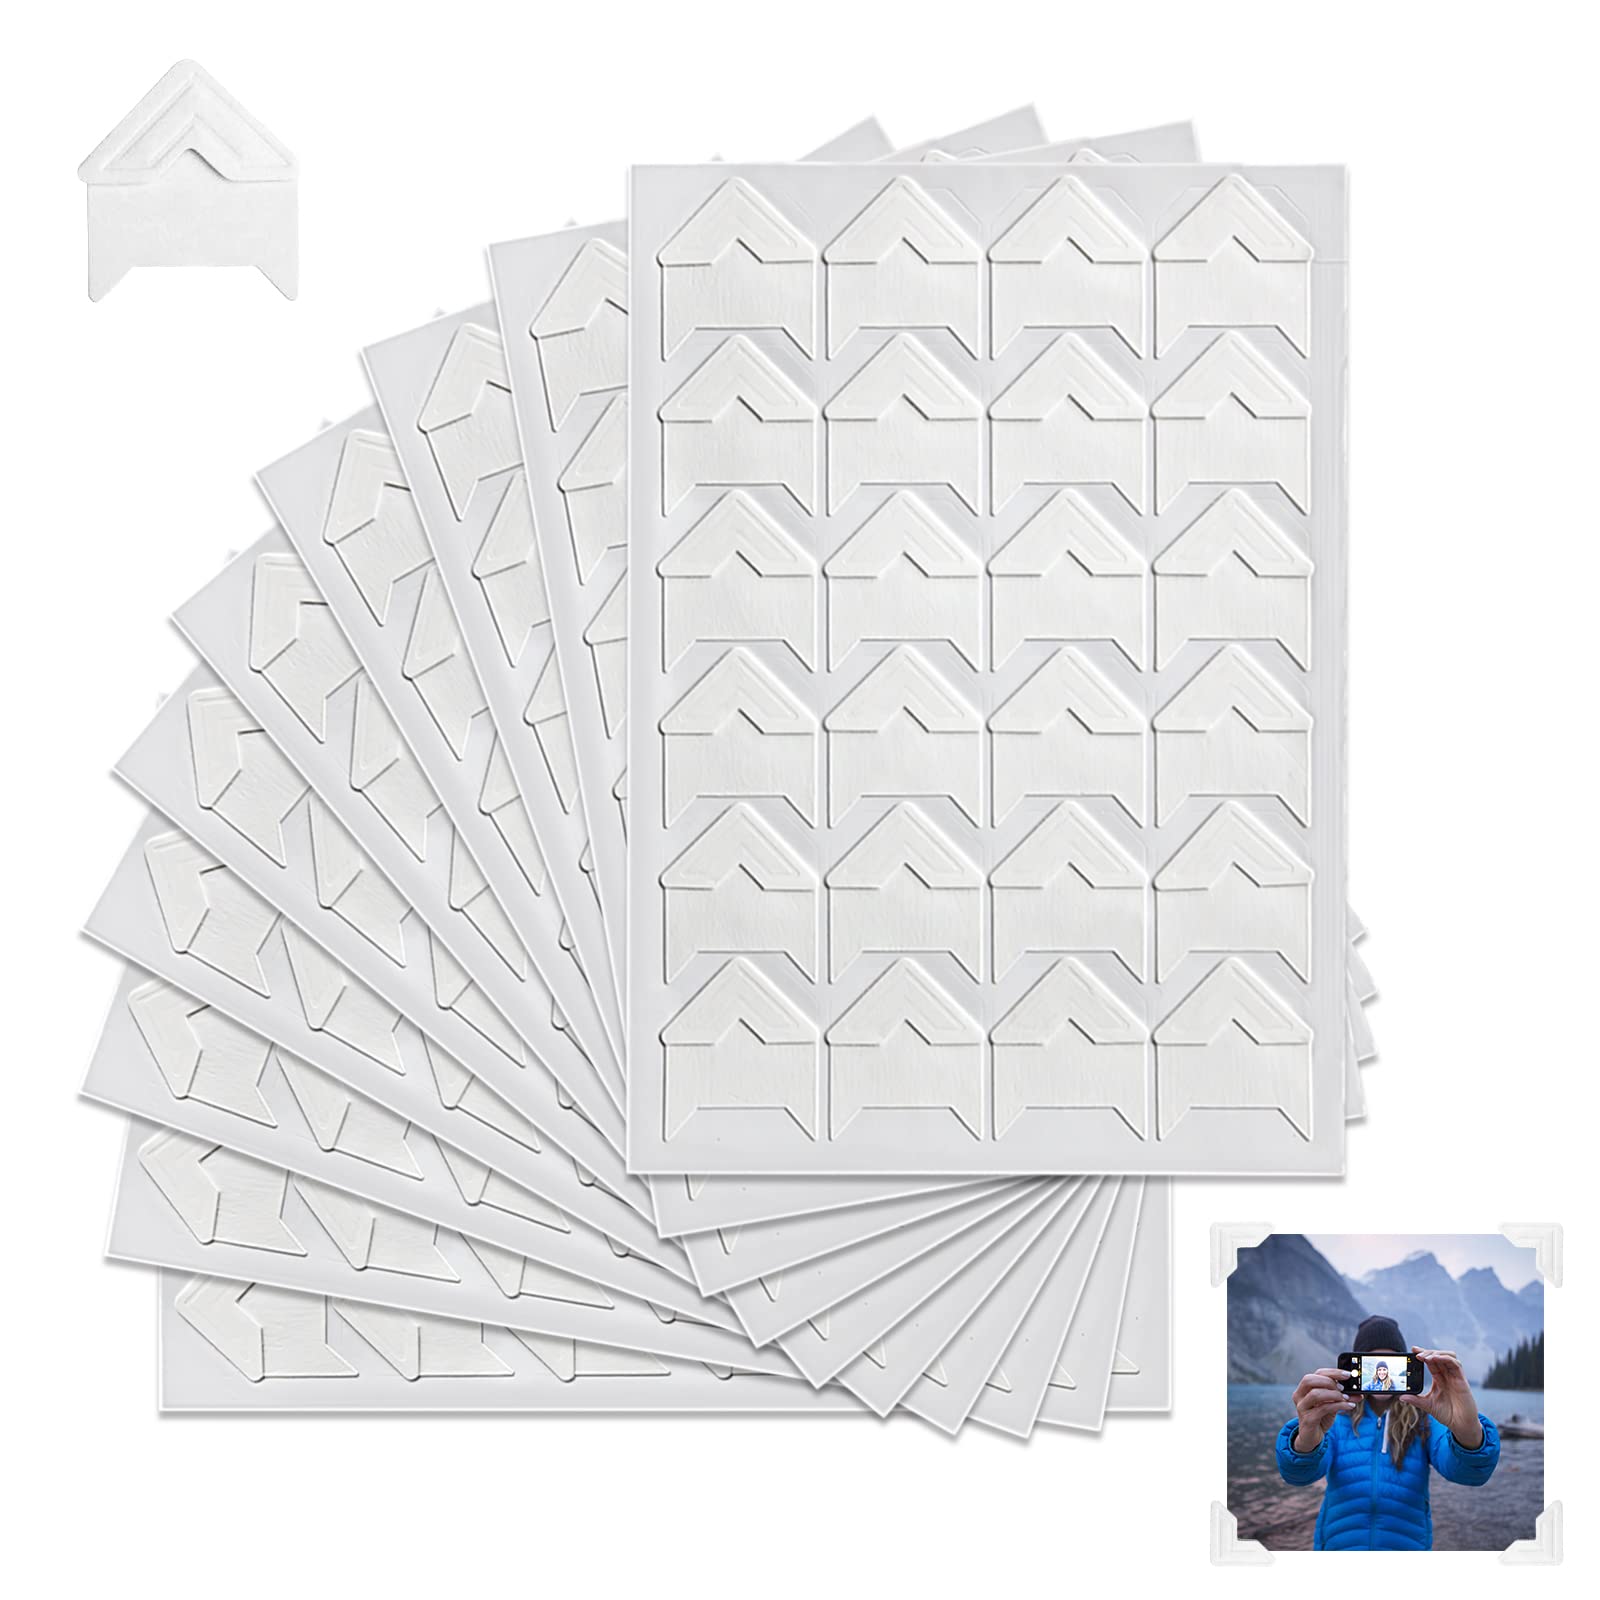 Photo Corner Sticker 10 Sheets (240 Pcs) Self Adhesive Photo